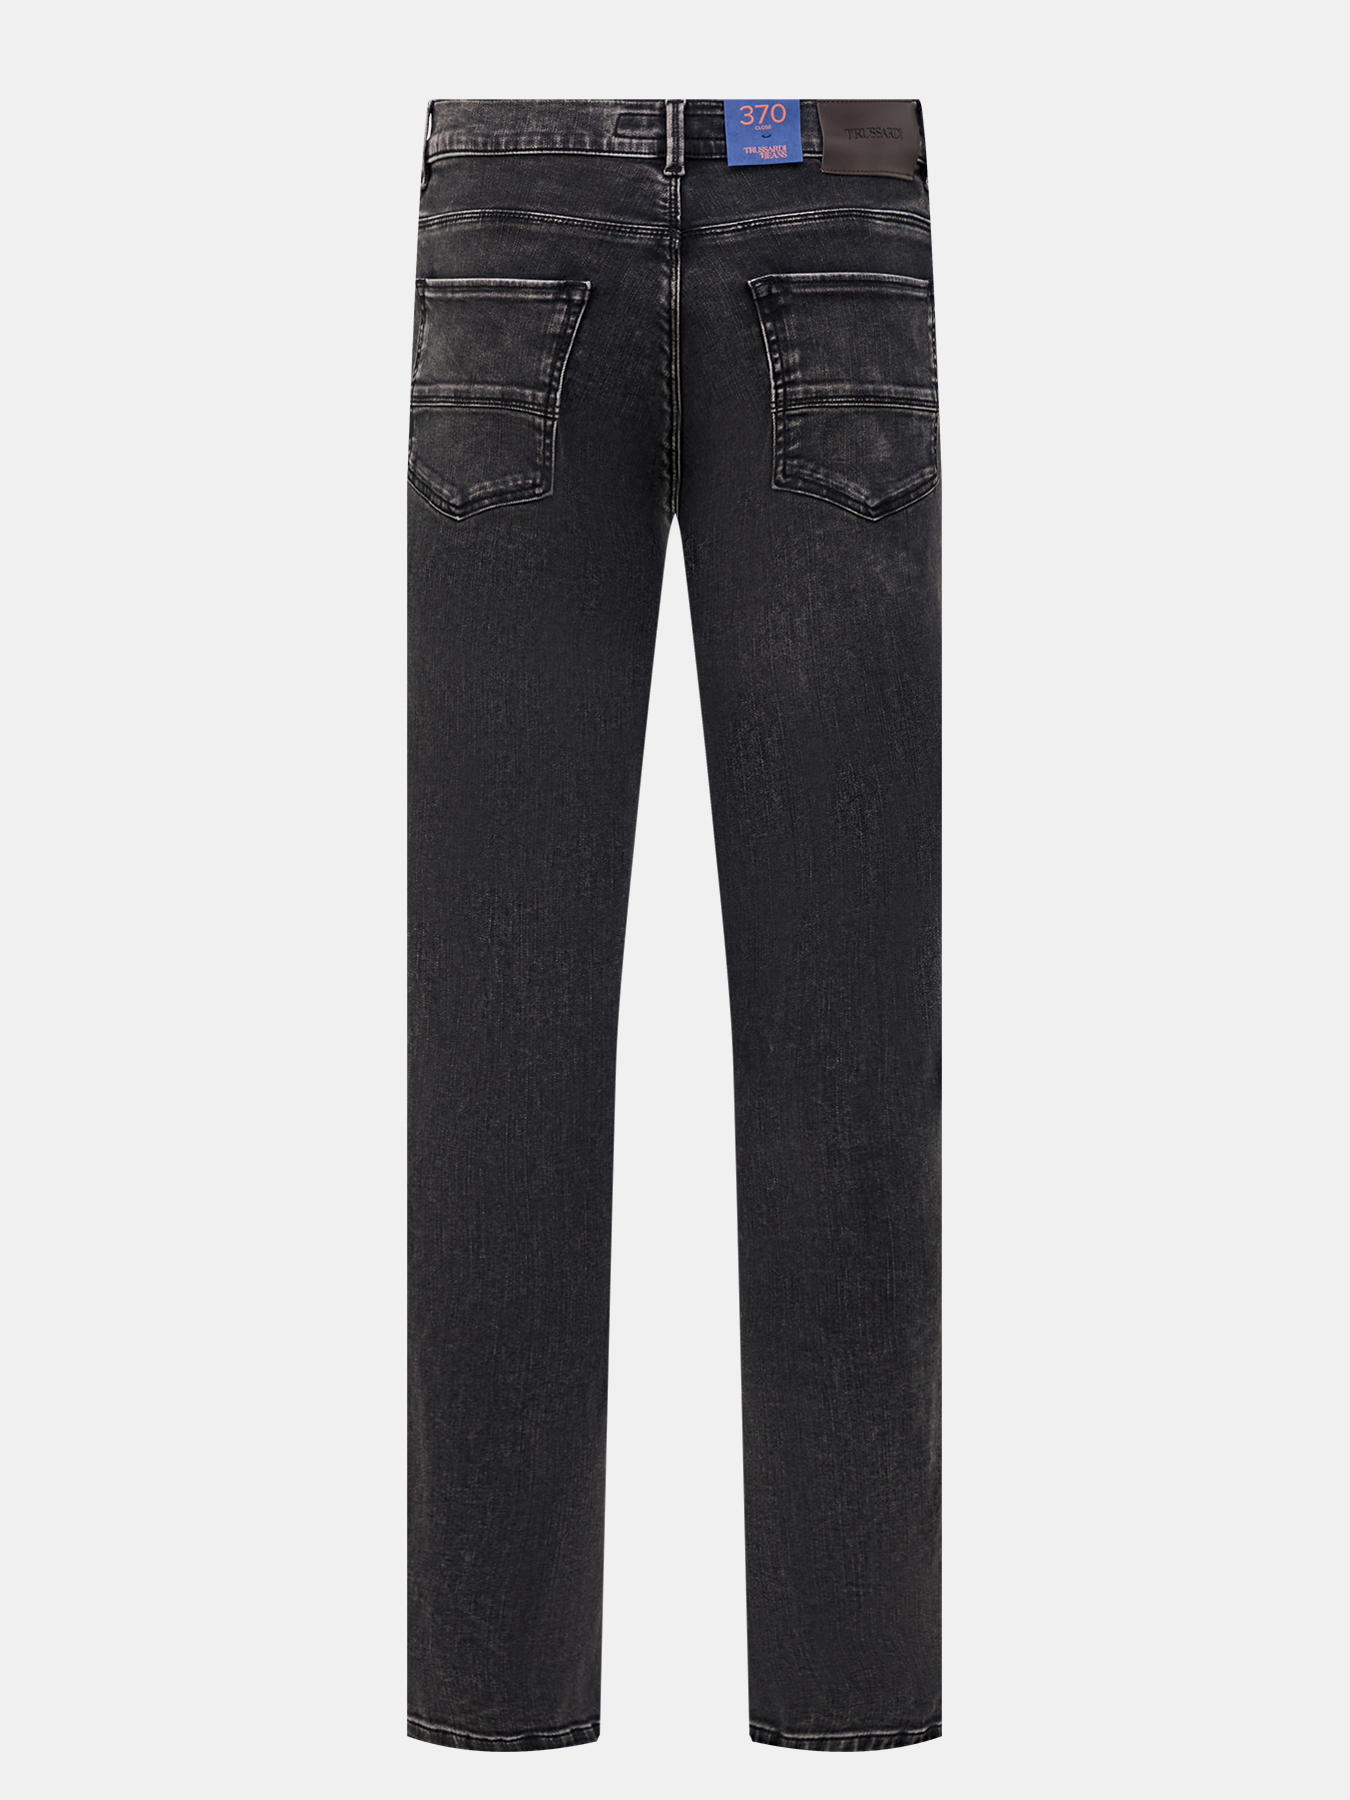 Mixed jeans. Trussardi Jeans. Купить джинсы Trussardi Riviera мужские.